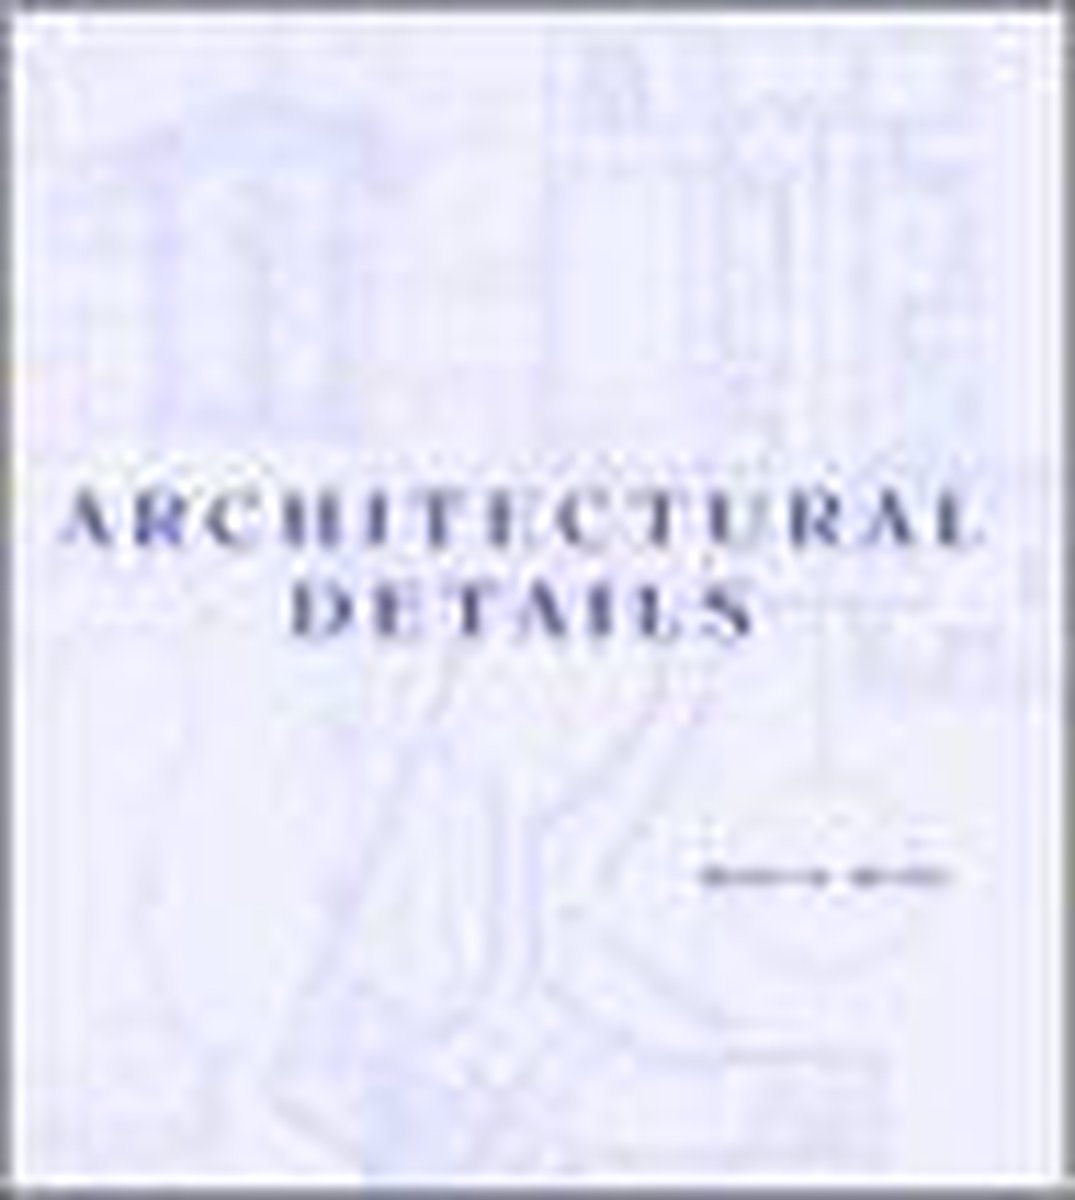 Architectural Details